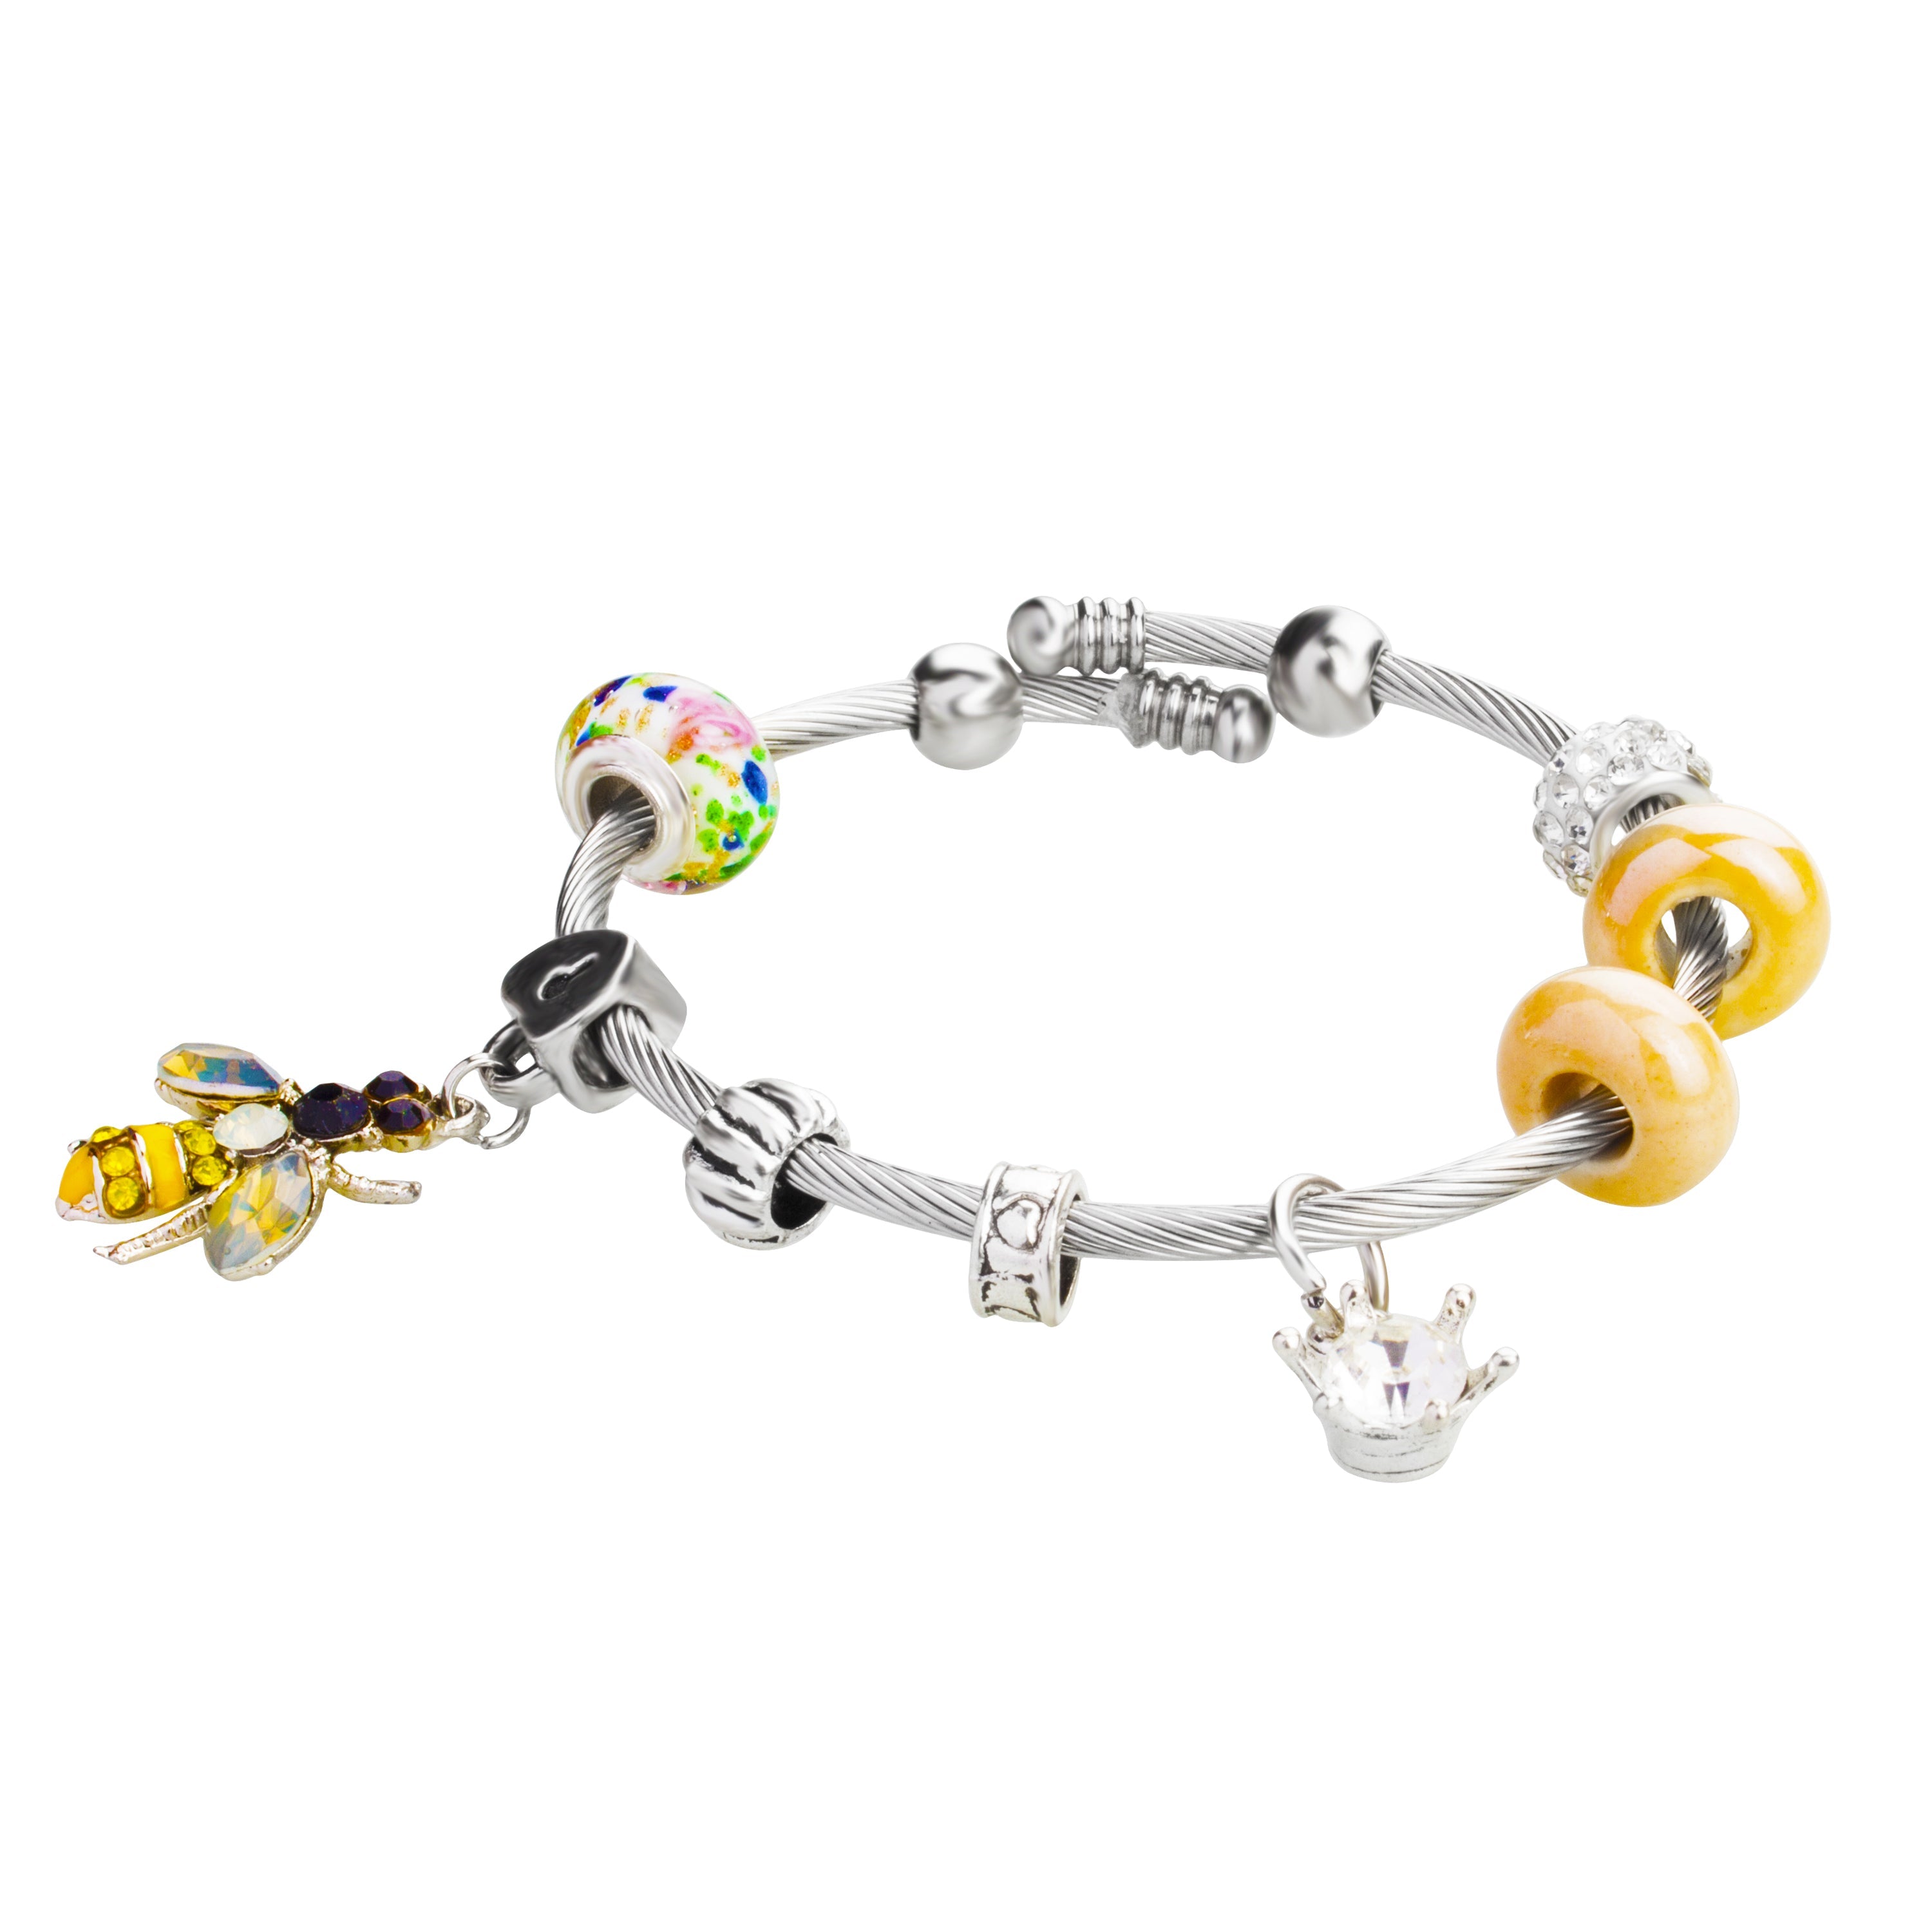 Why are Pandora bracelets so expensive? - Quora